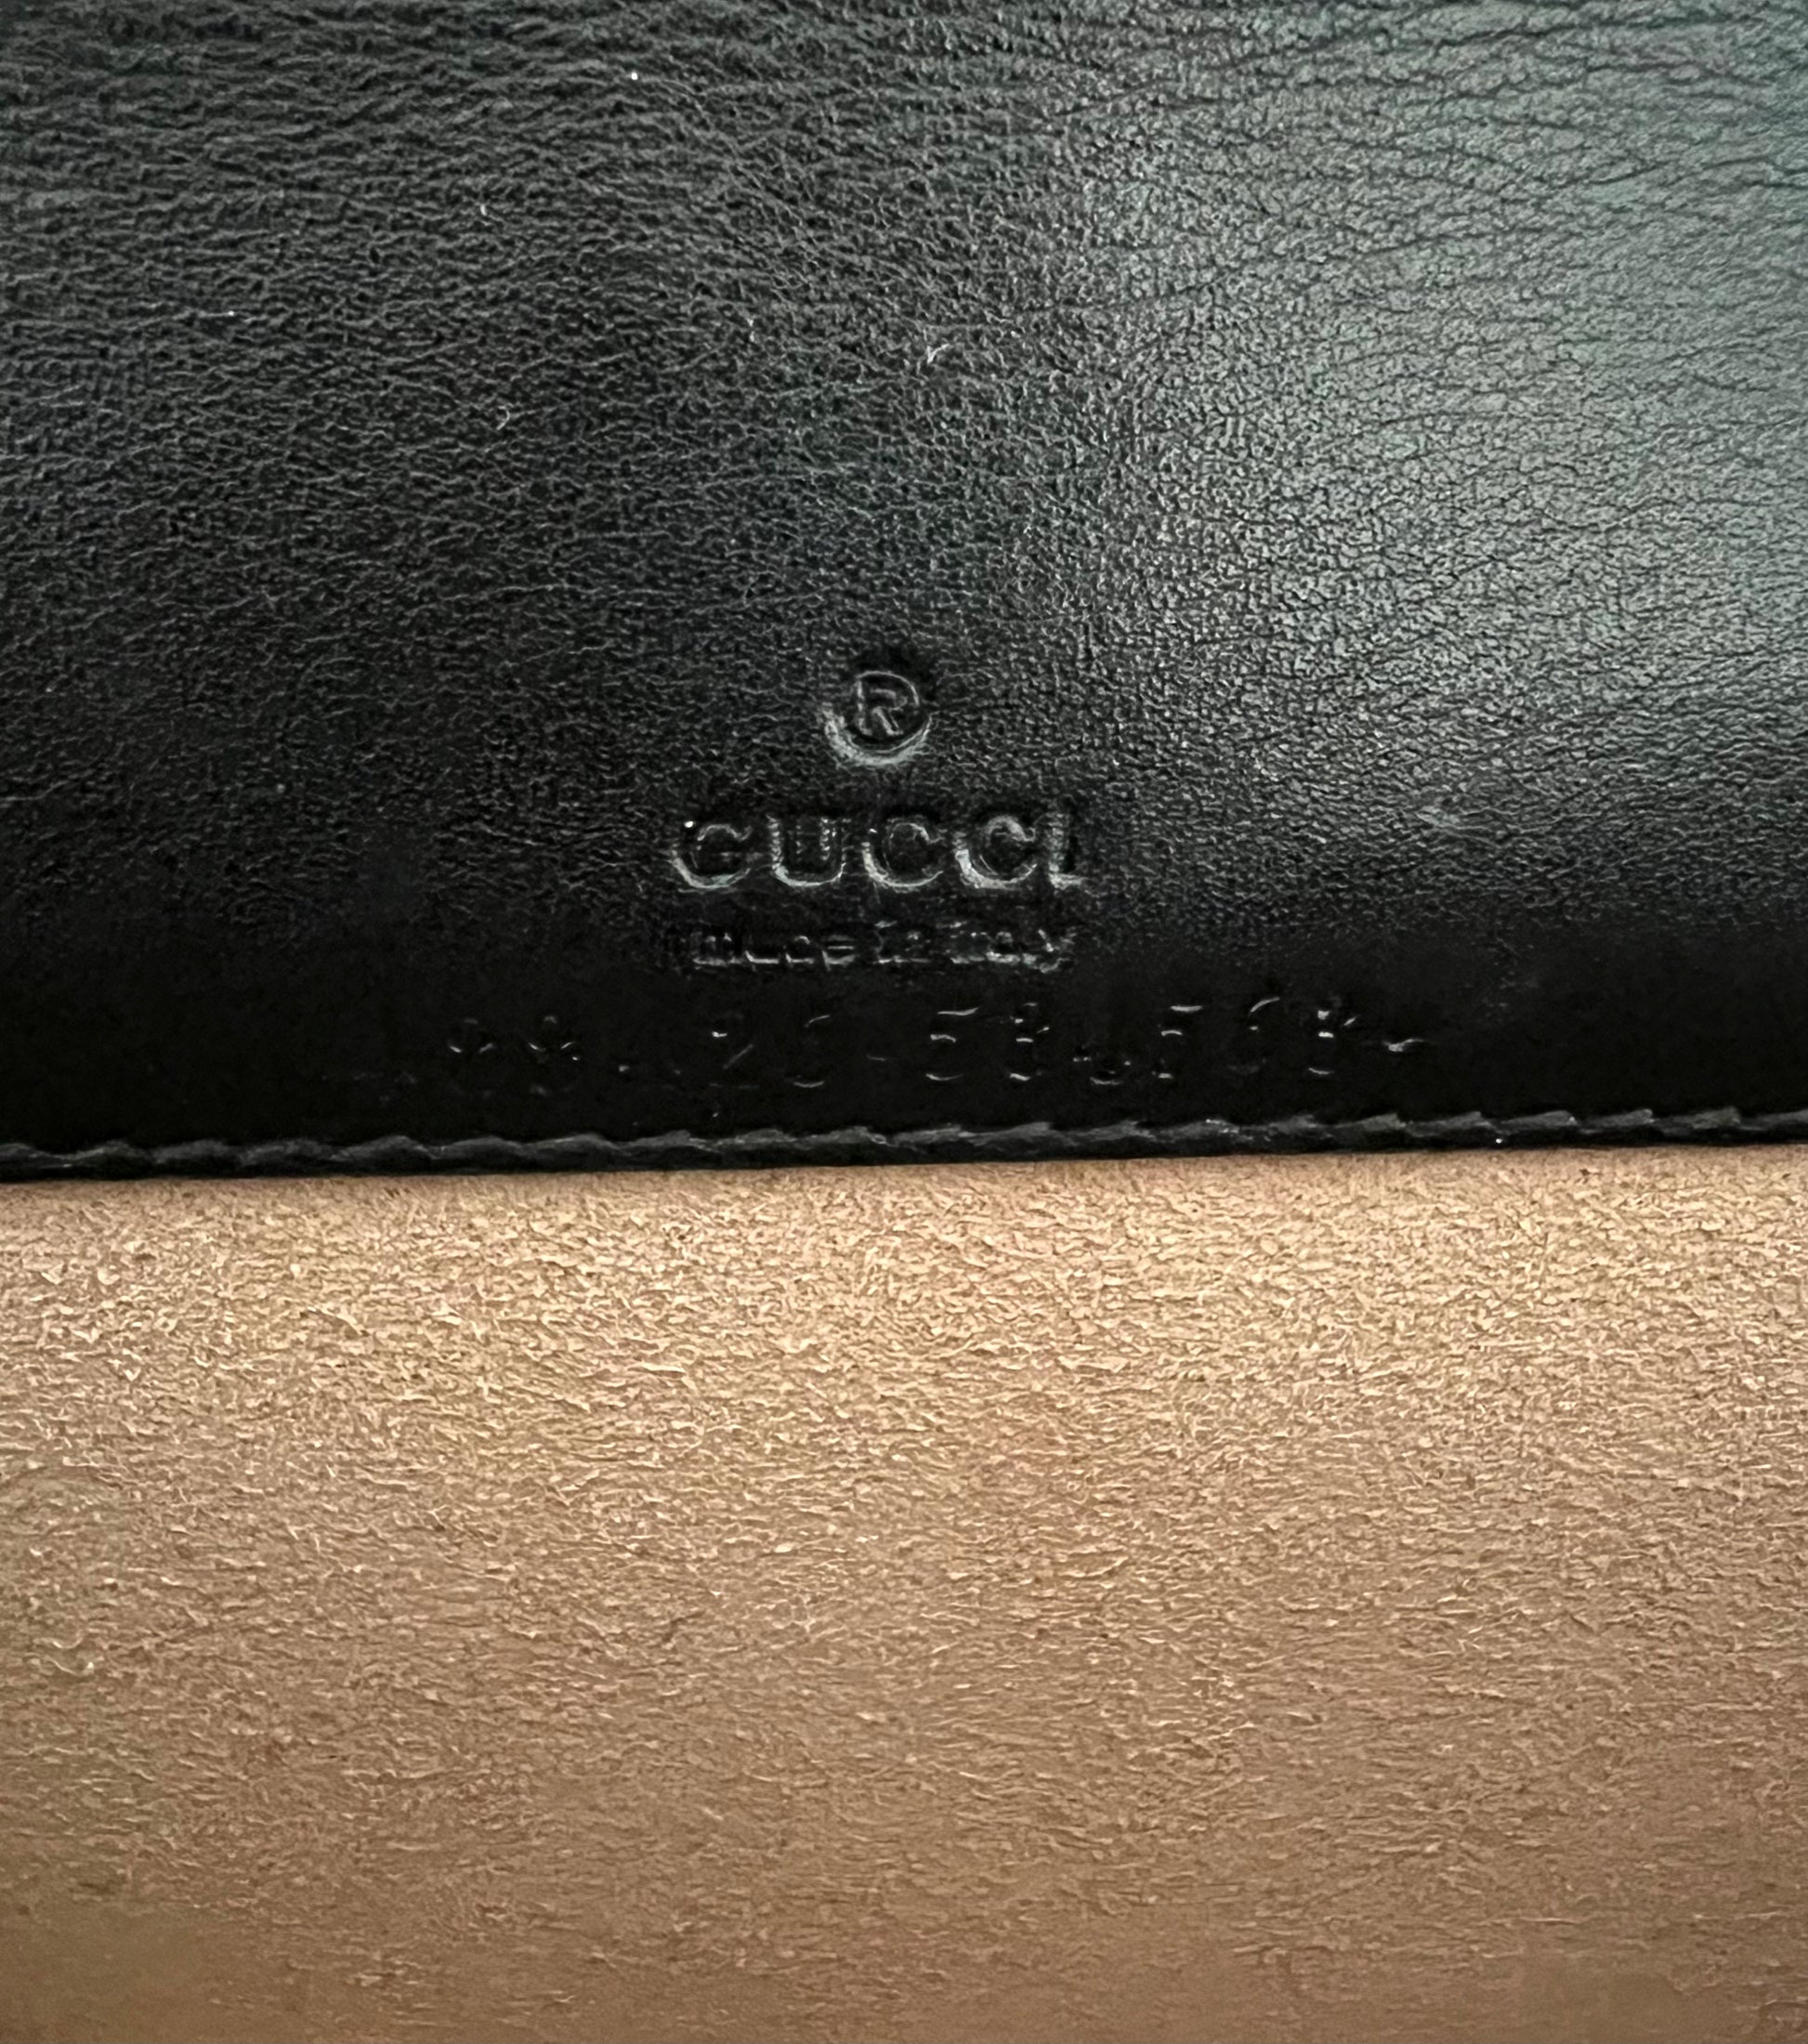 Gucci GG Mini Marmont Chain Bag Black Leather Chevron Crossbody Shoulder  Bag - GemandLoan